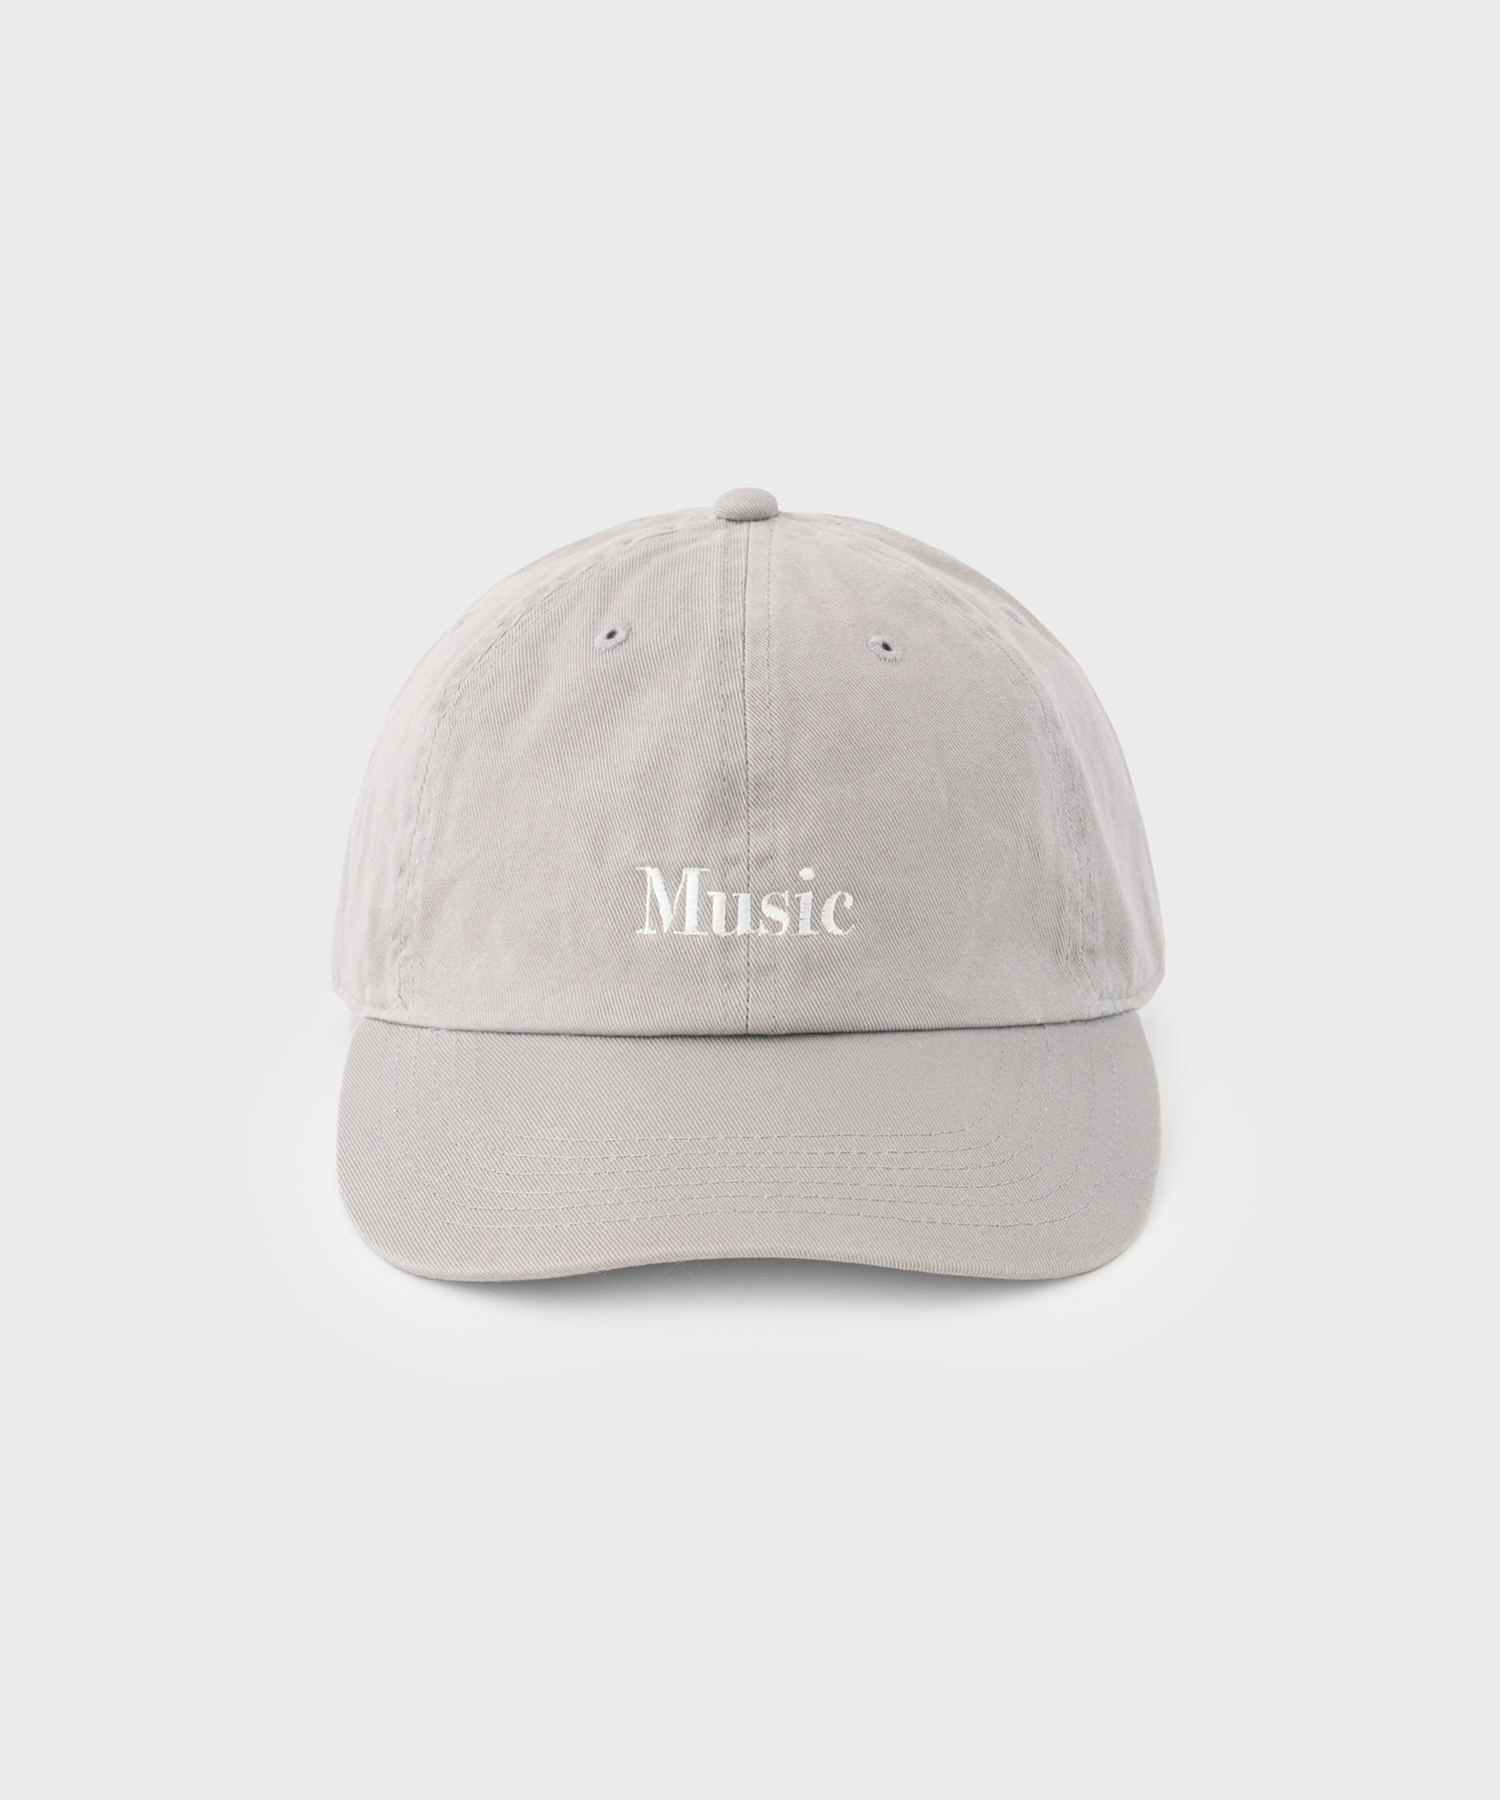 Music Cap (Gray)